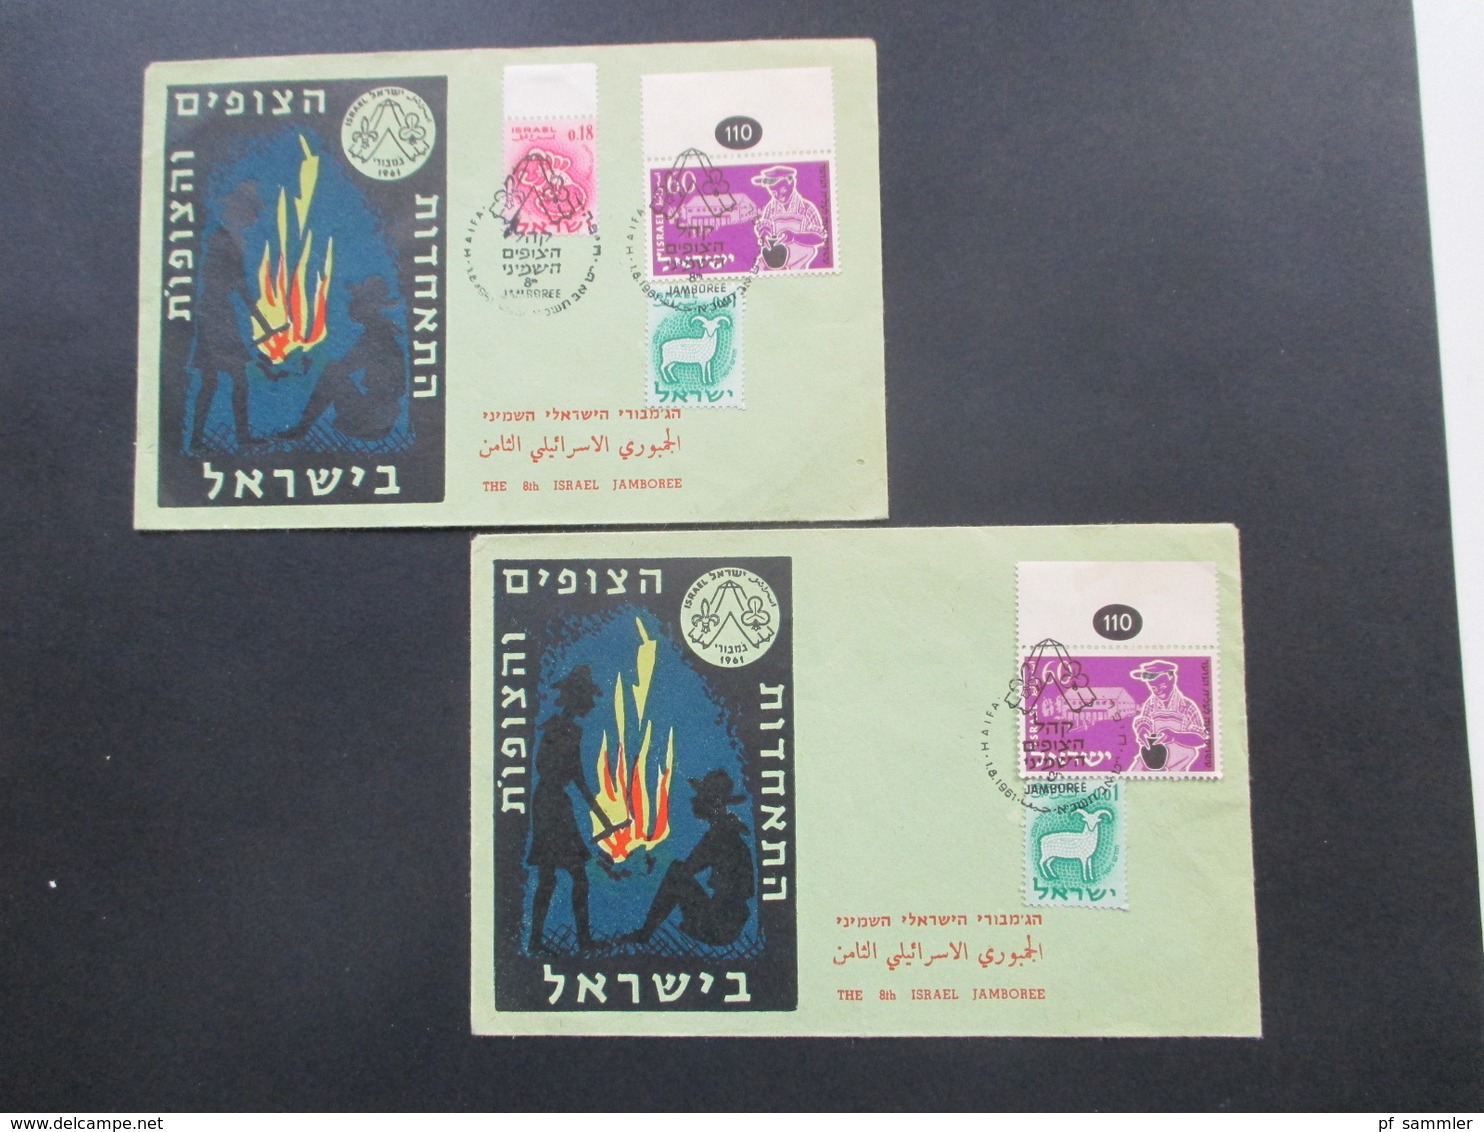 Israel 2 Sonderbelege 8th Israel Jamboree. Pfadfinder. SST / Marken Vom Bogenrand. Lagerfeuer / Zelt / Boy Scouts 1961 - Covers & Documents